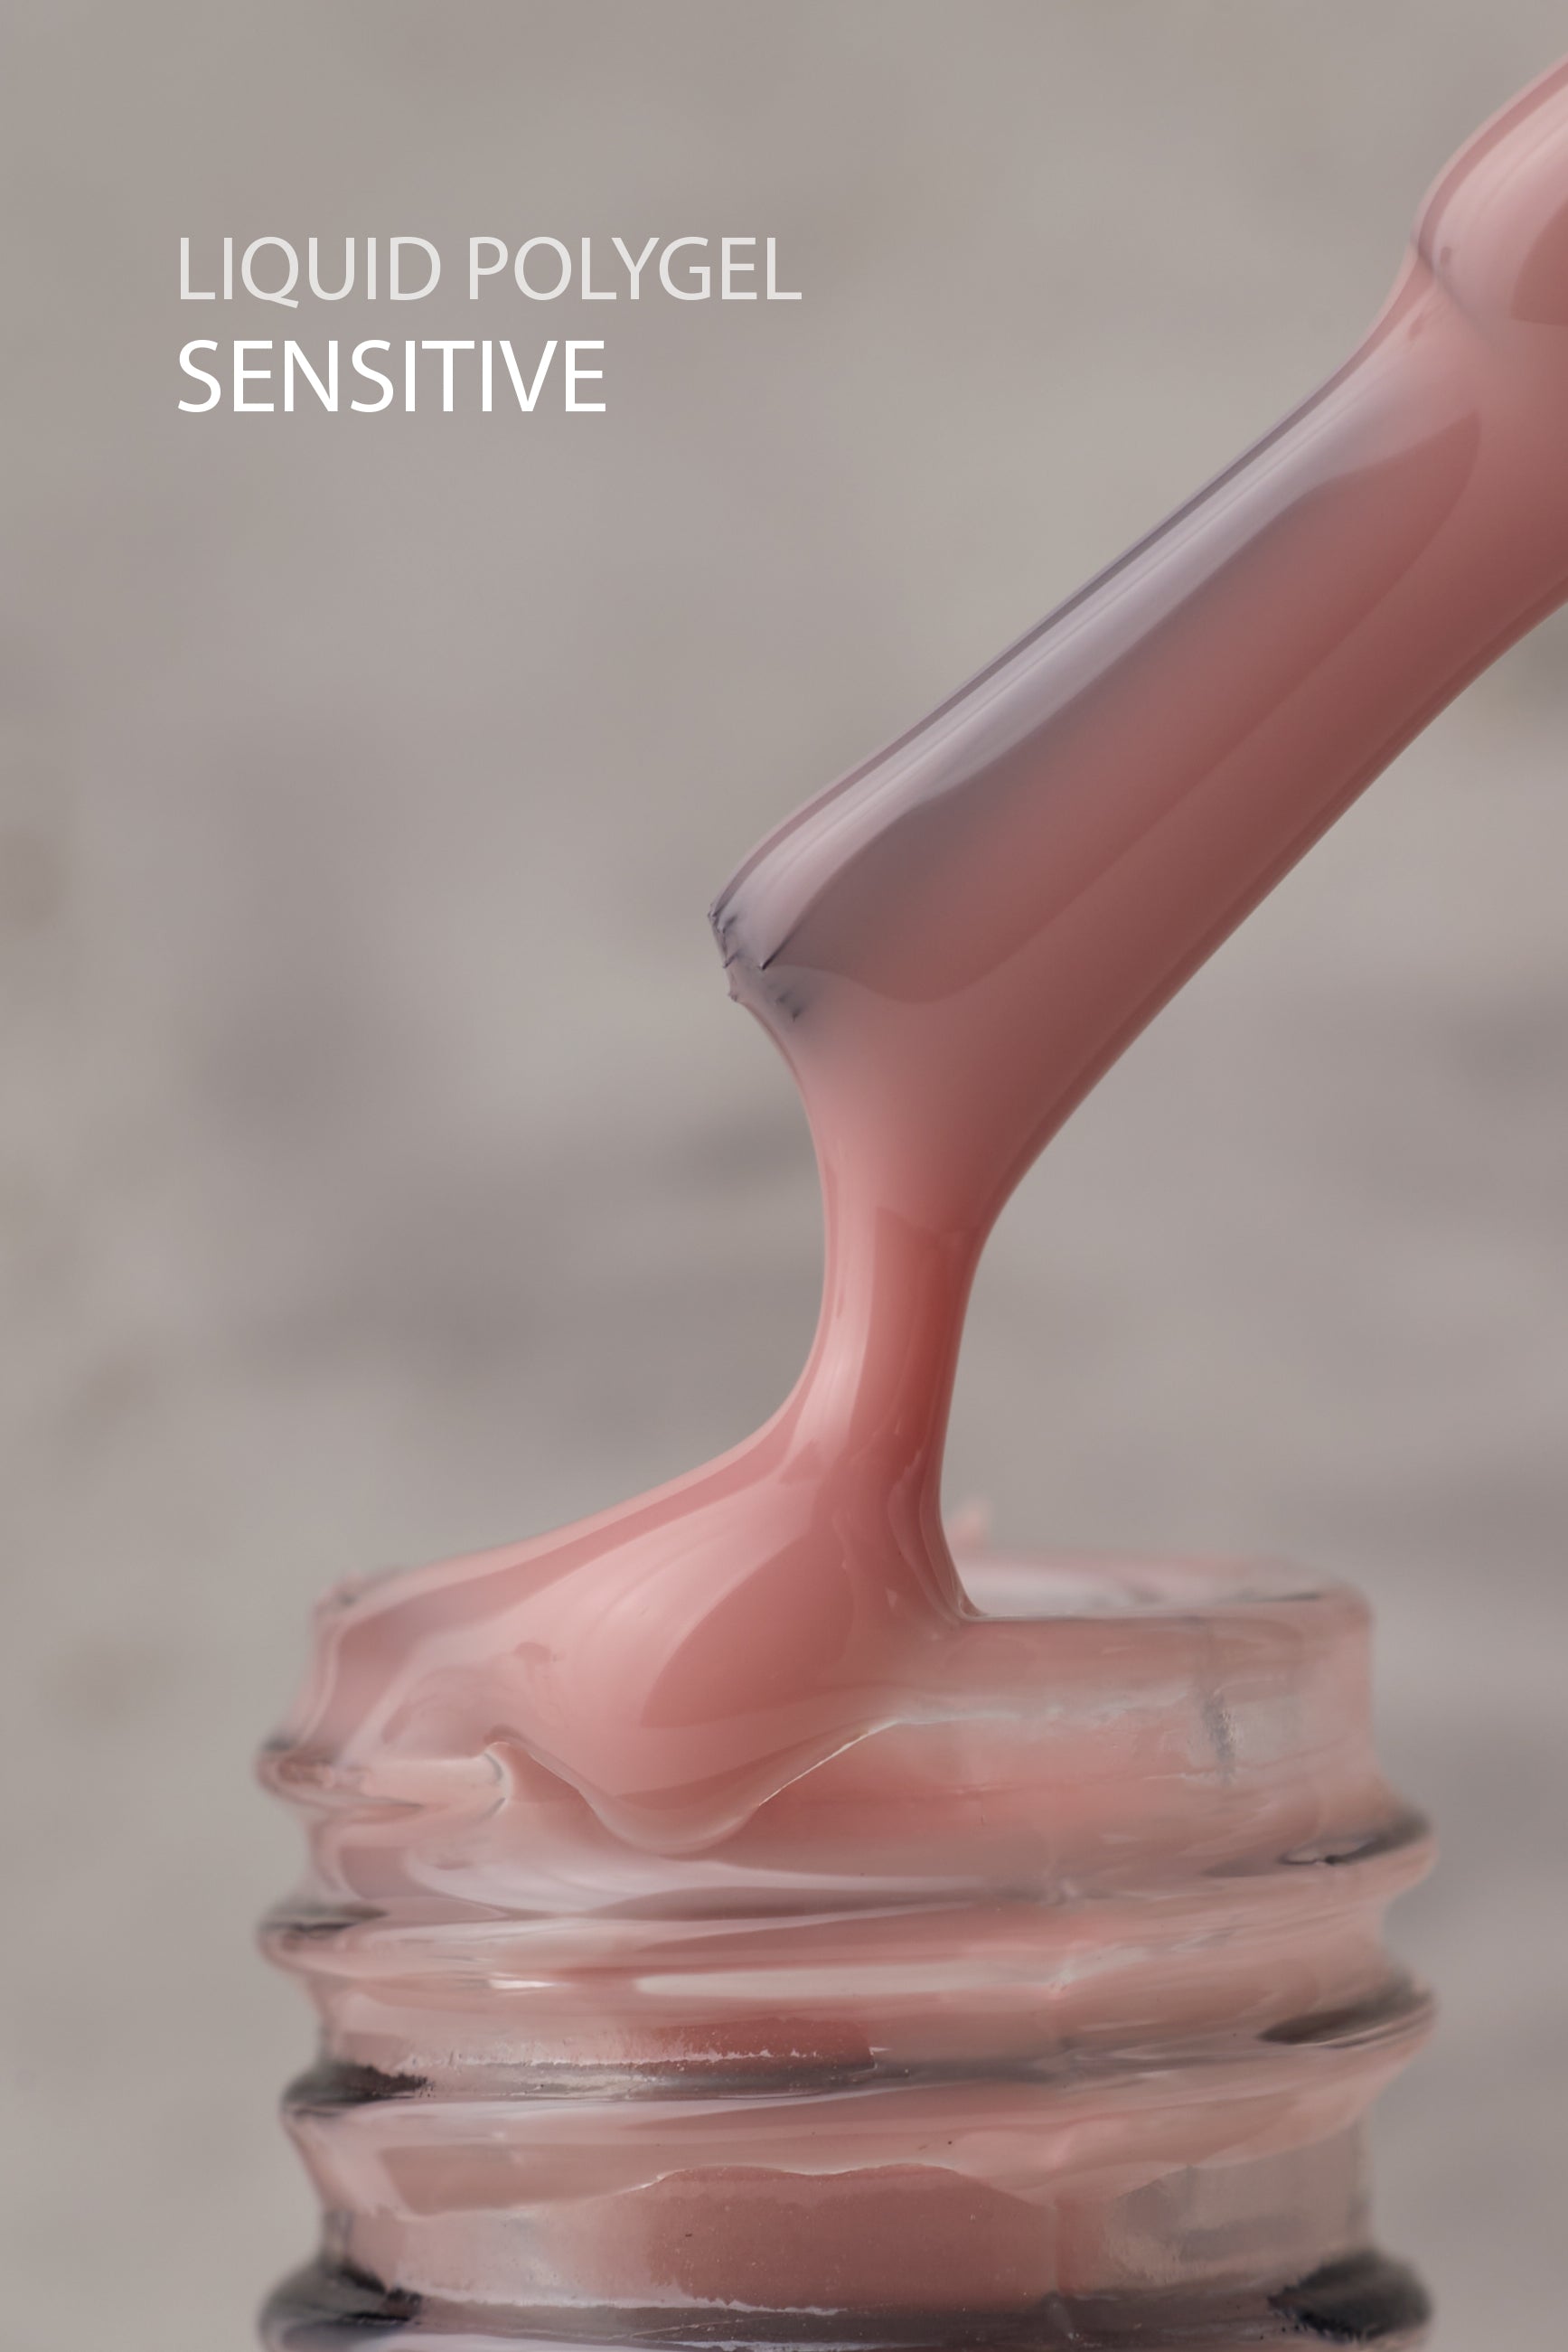 polygel liquide sensitive nude albi - ongles pro